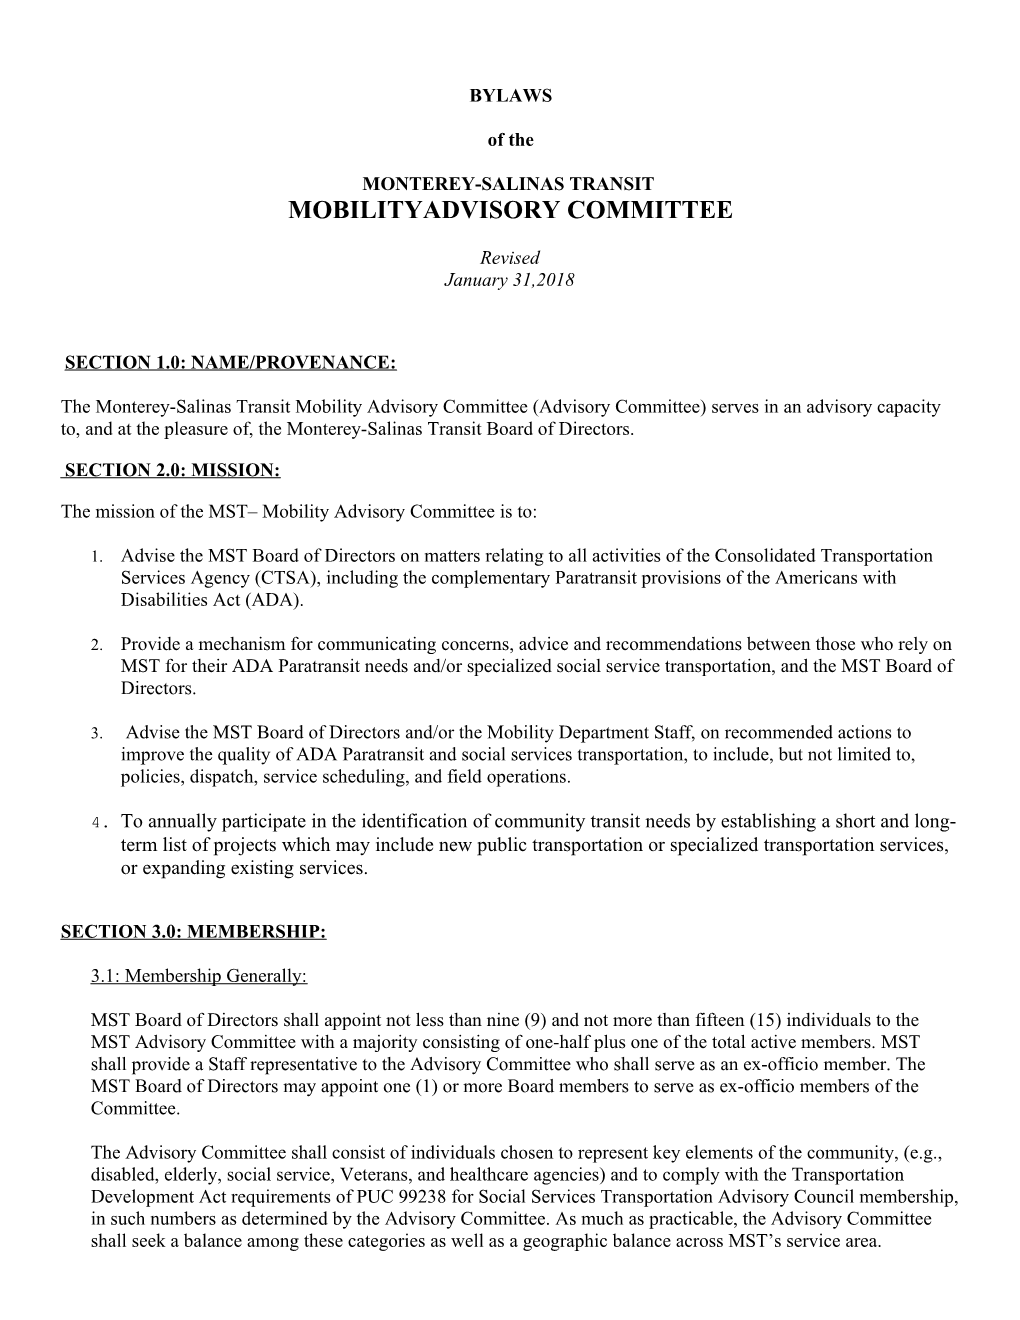 Monterey-Salinas Transit Mobilityadvisory Committee